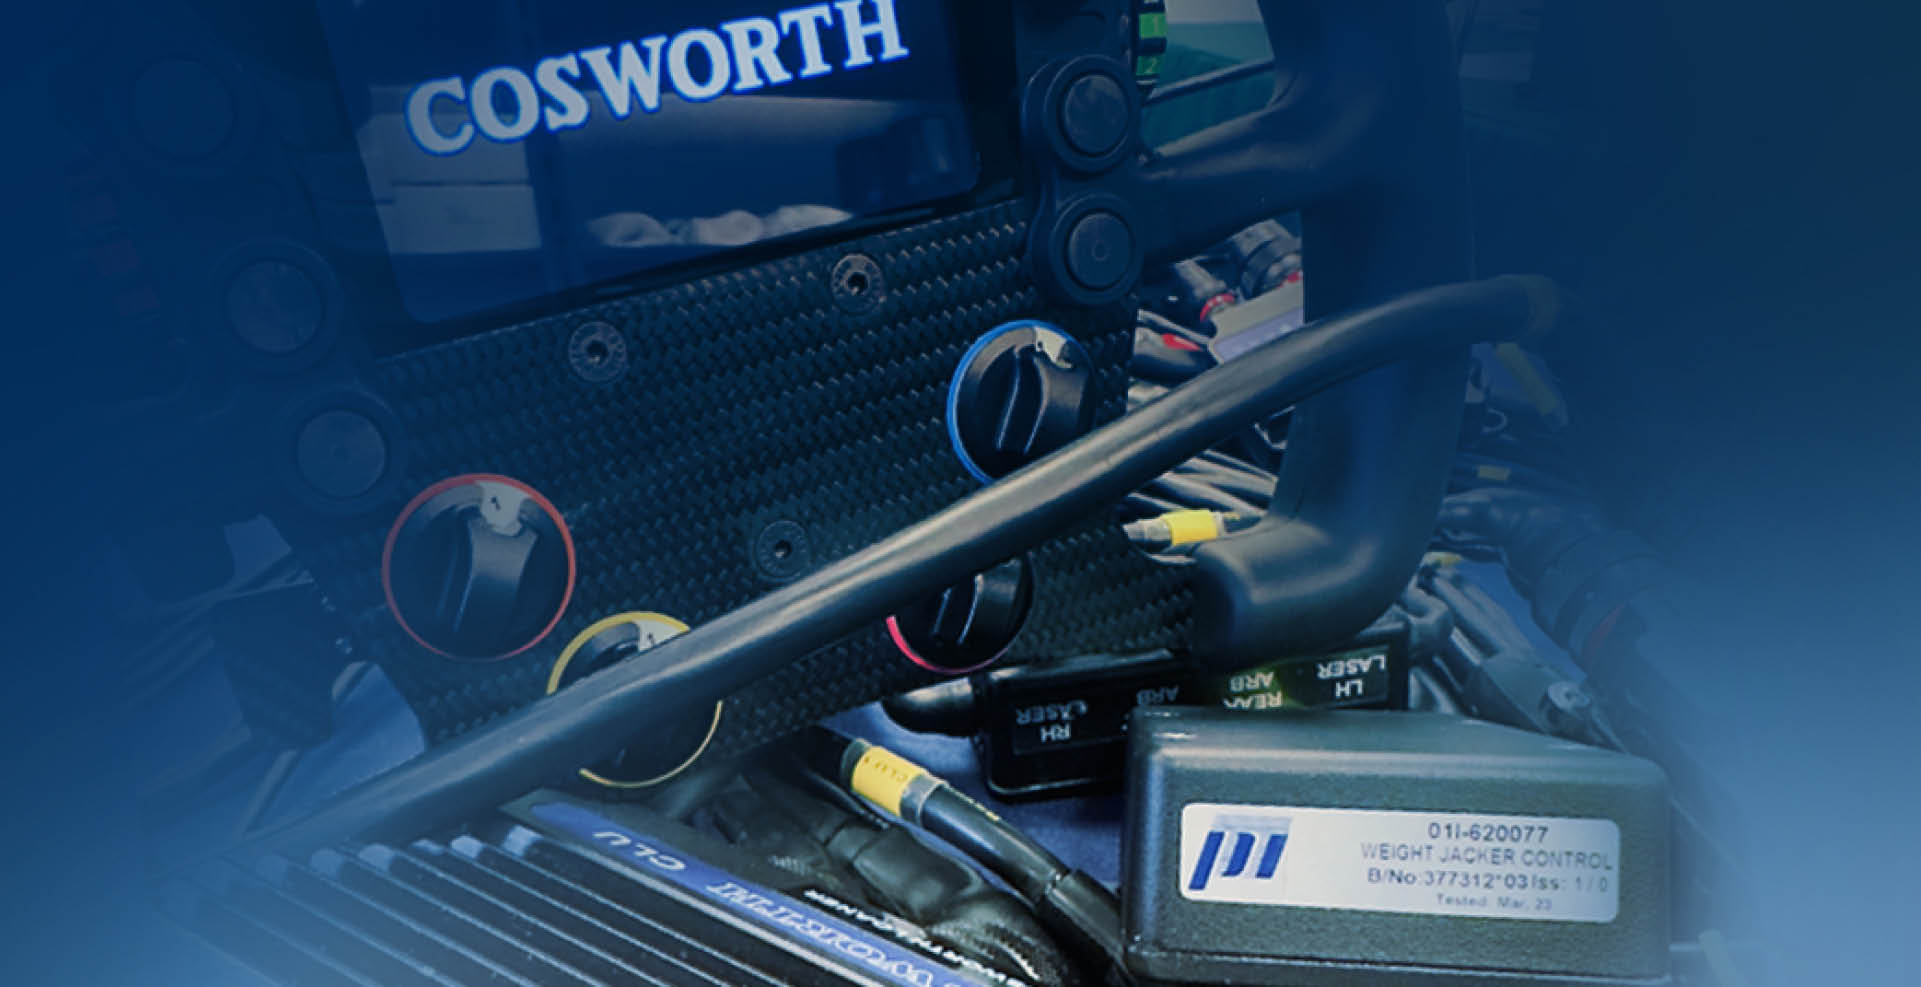  Cosworth Weight Jacker